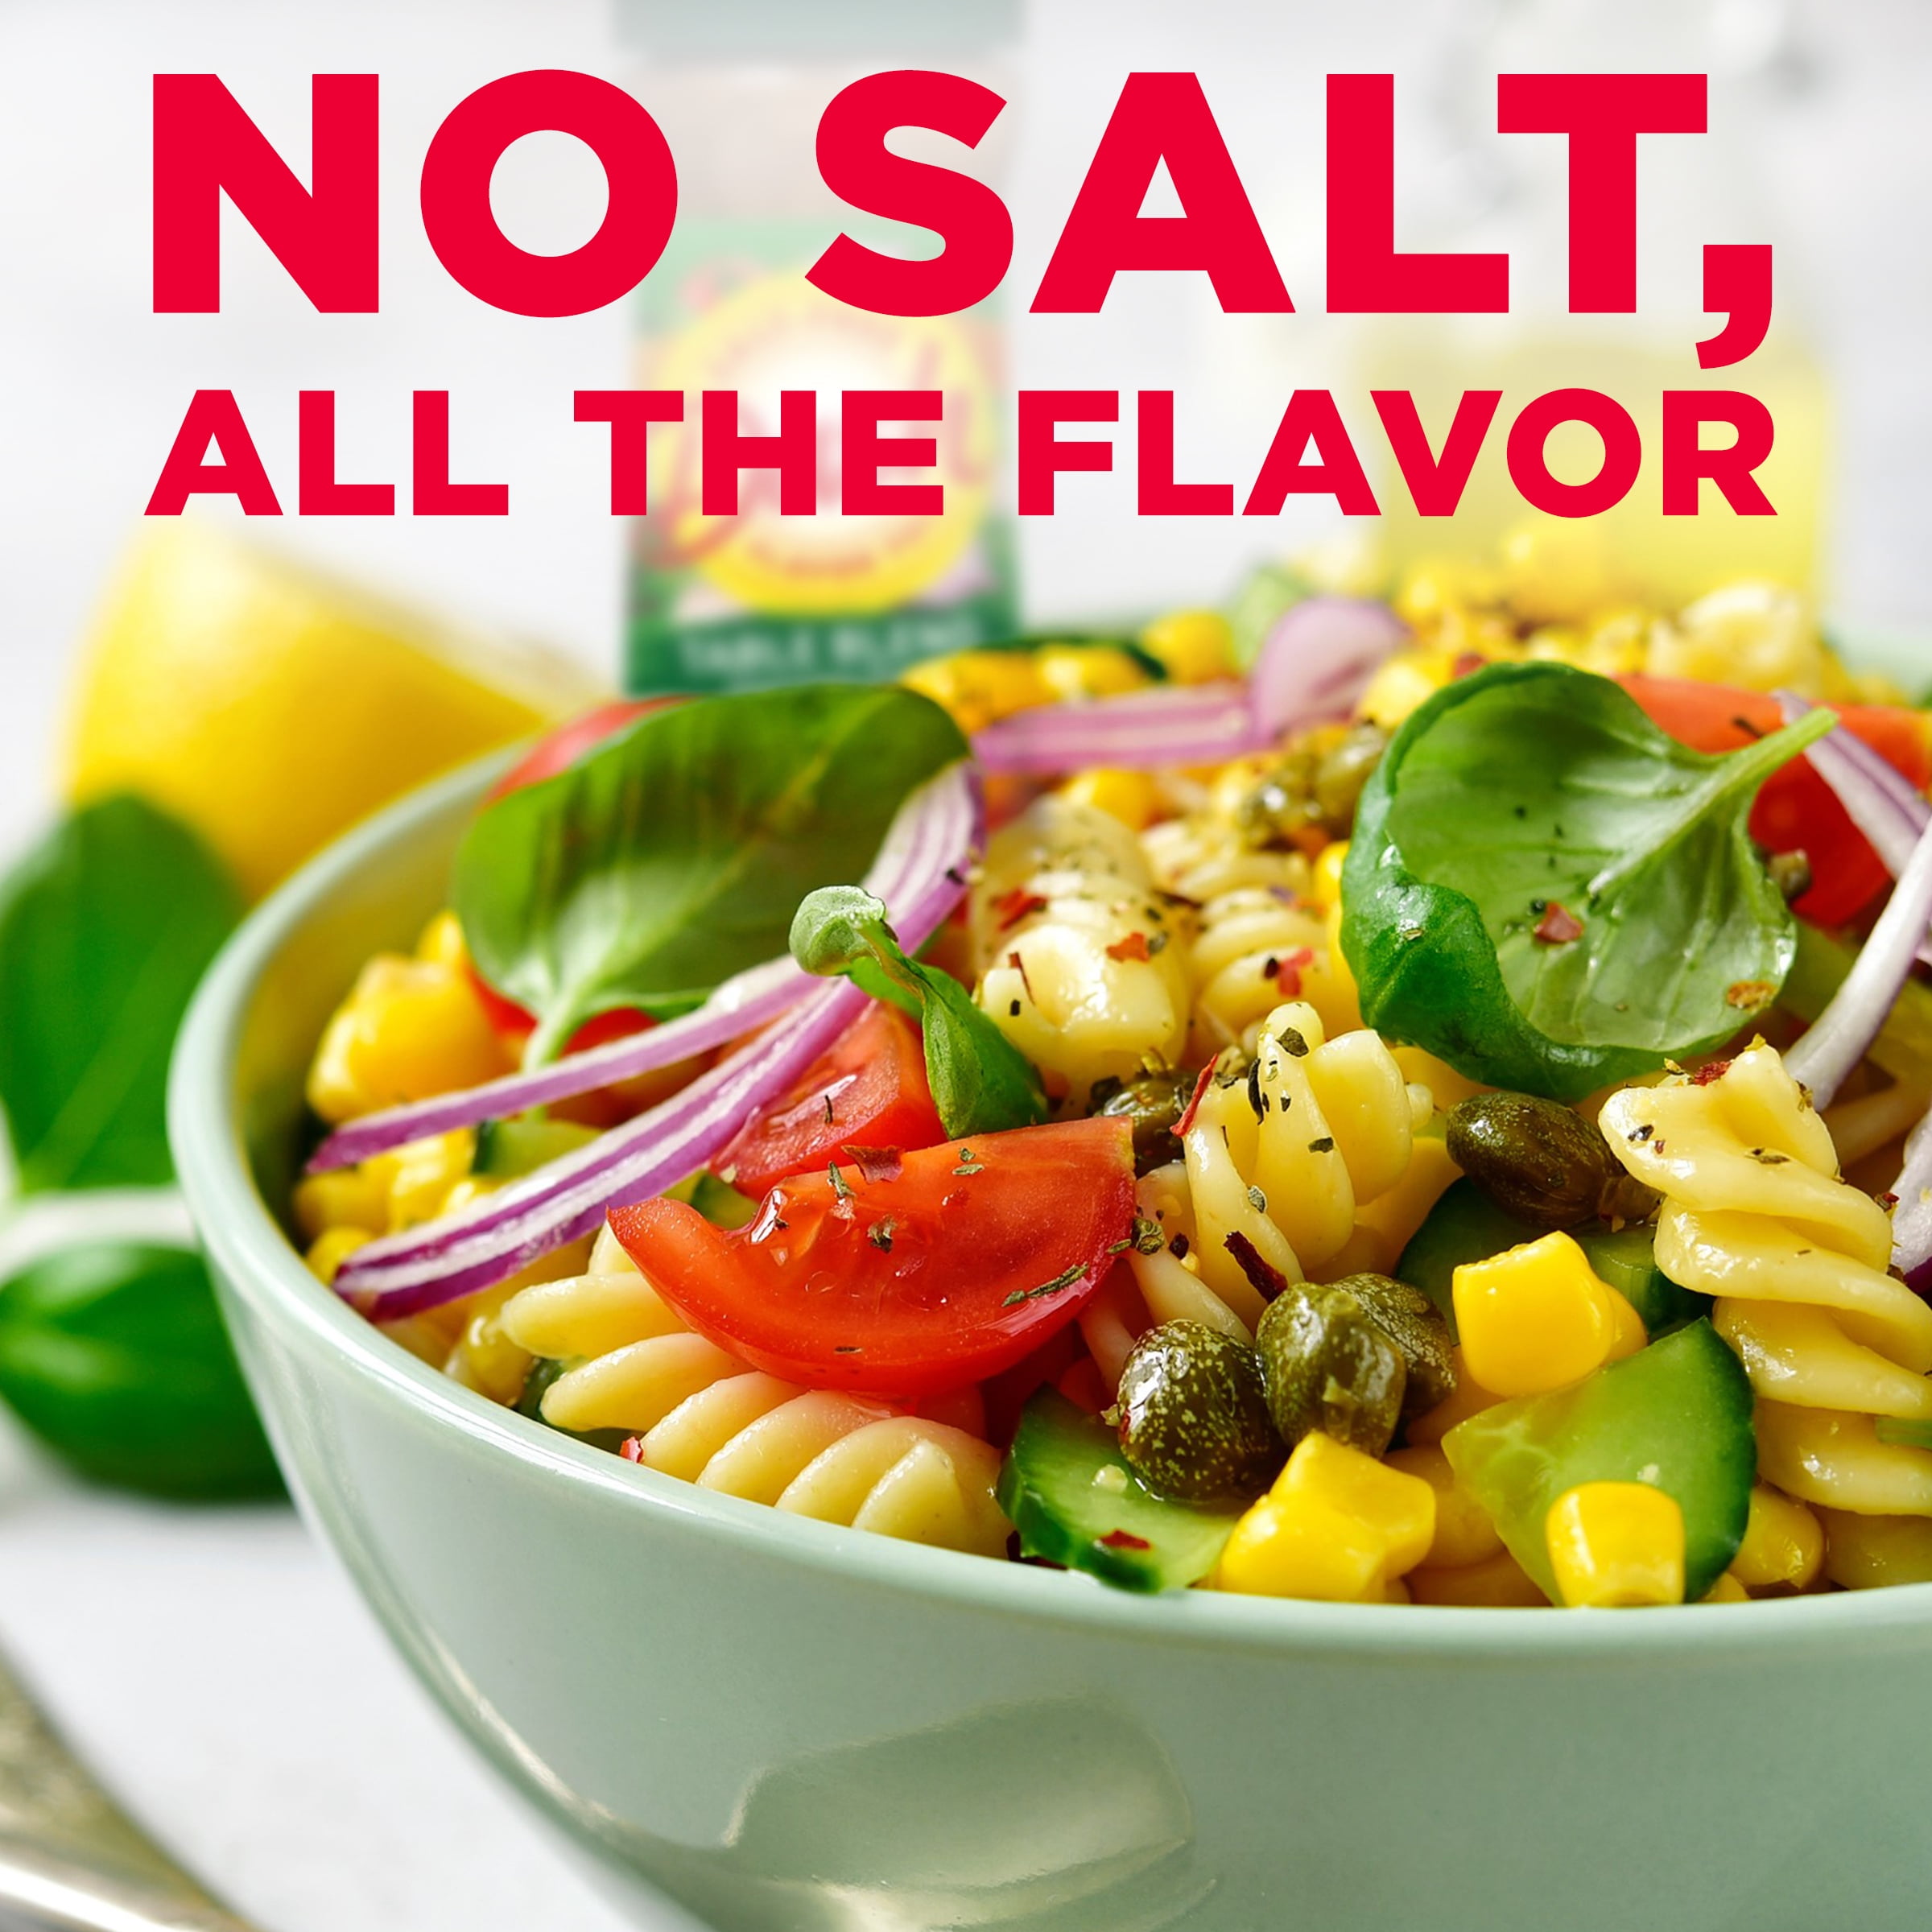  Dash Salt-Free Seasoning Blend, Garlic & Herb, 2.5 Ounce :  Everything Else